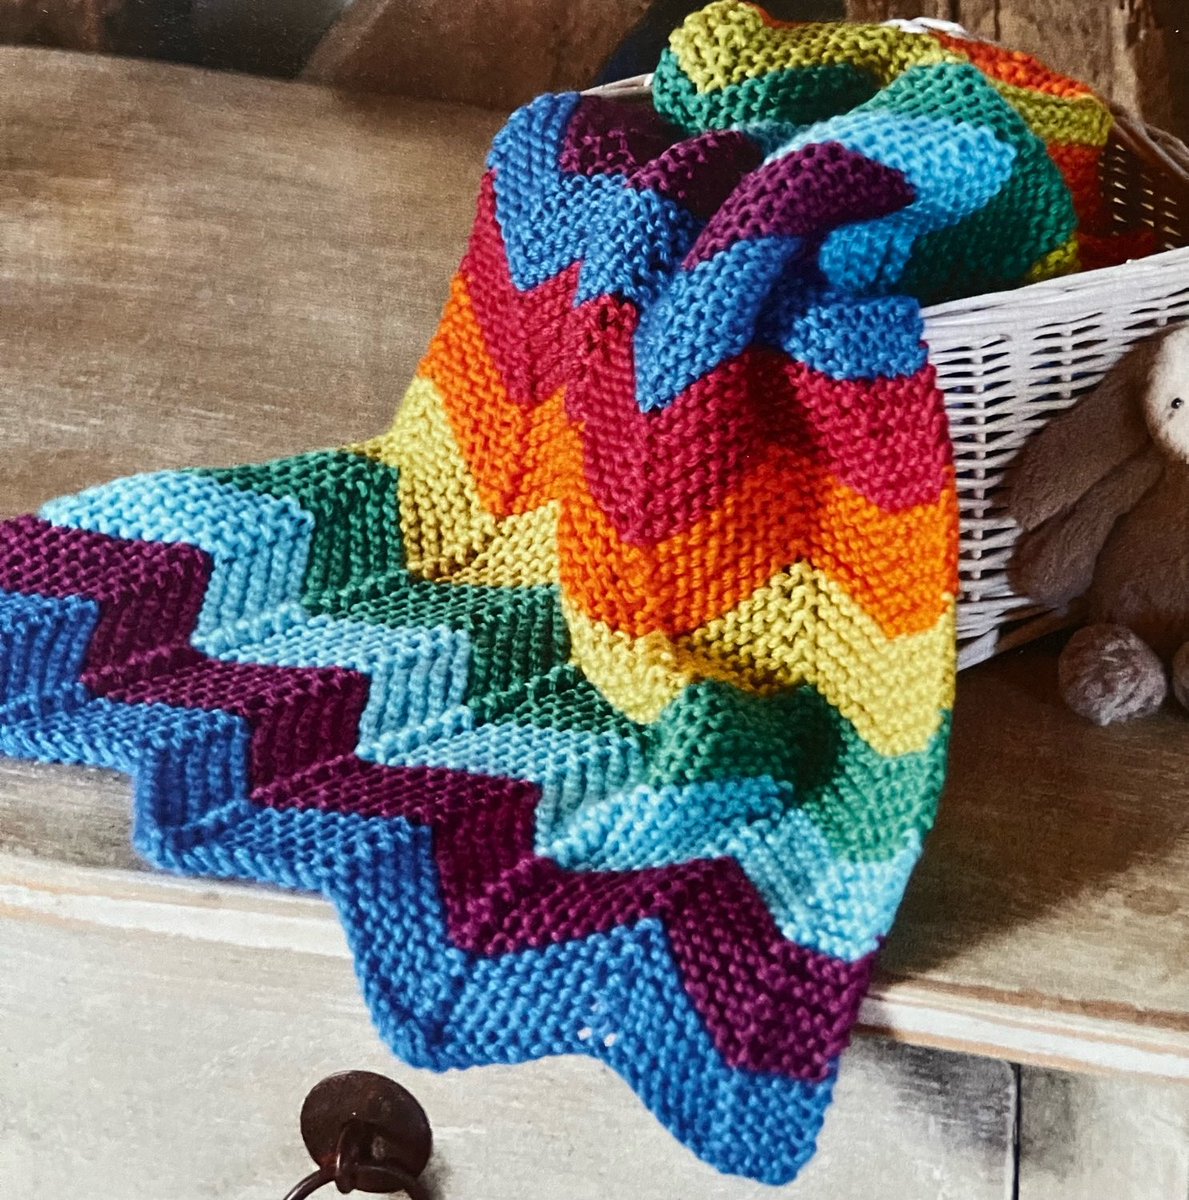 Knitted Chevron Rainbow Blanket Pattern #wip #MHHSBD #magic #chevronrainbow #rugmaking #rainbows #rainbowblanket #chevrons #knit #knitting #knittedblanket #knittingpattern etsy.me/3oadyy7